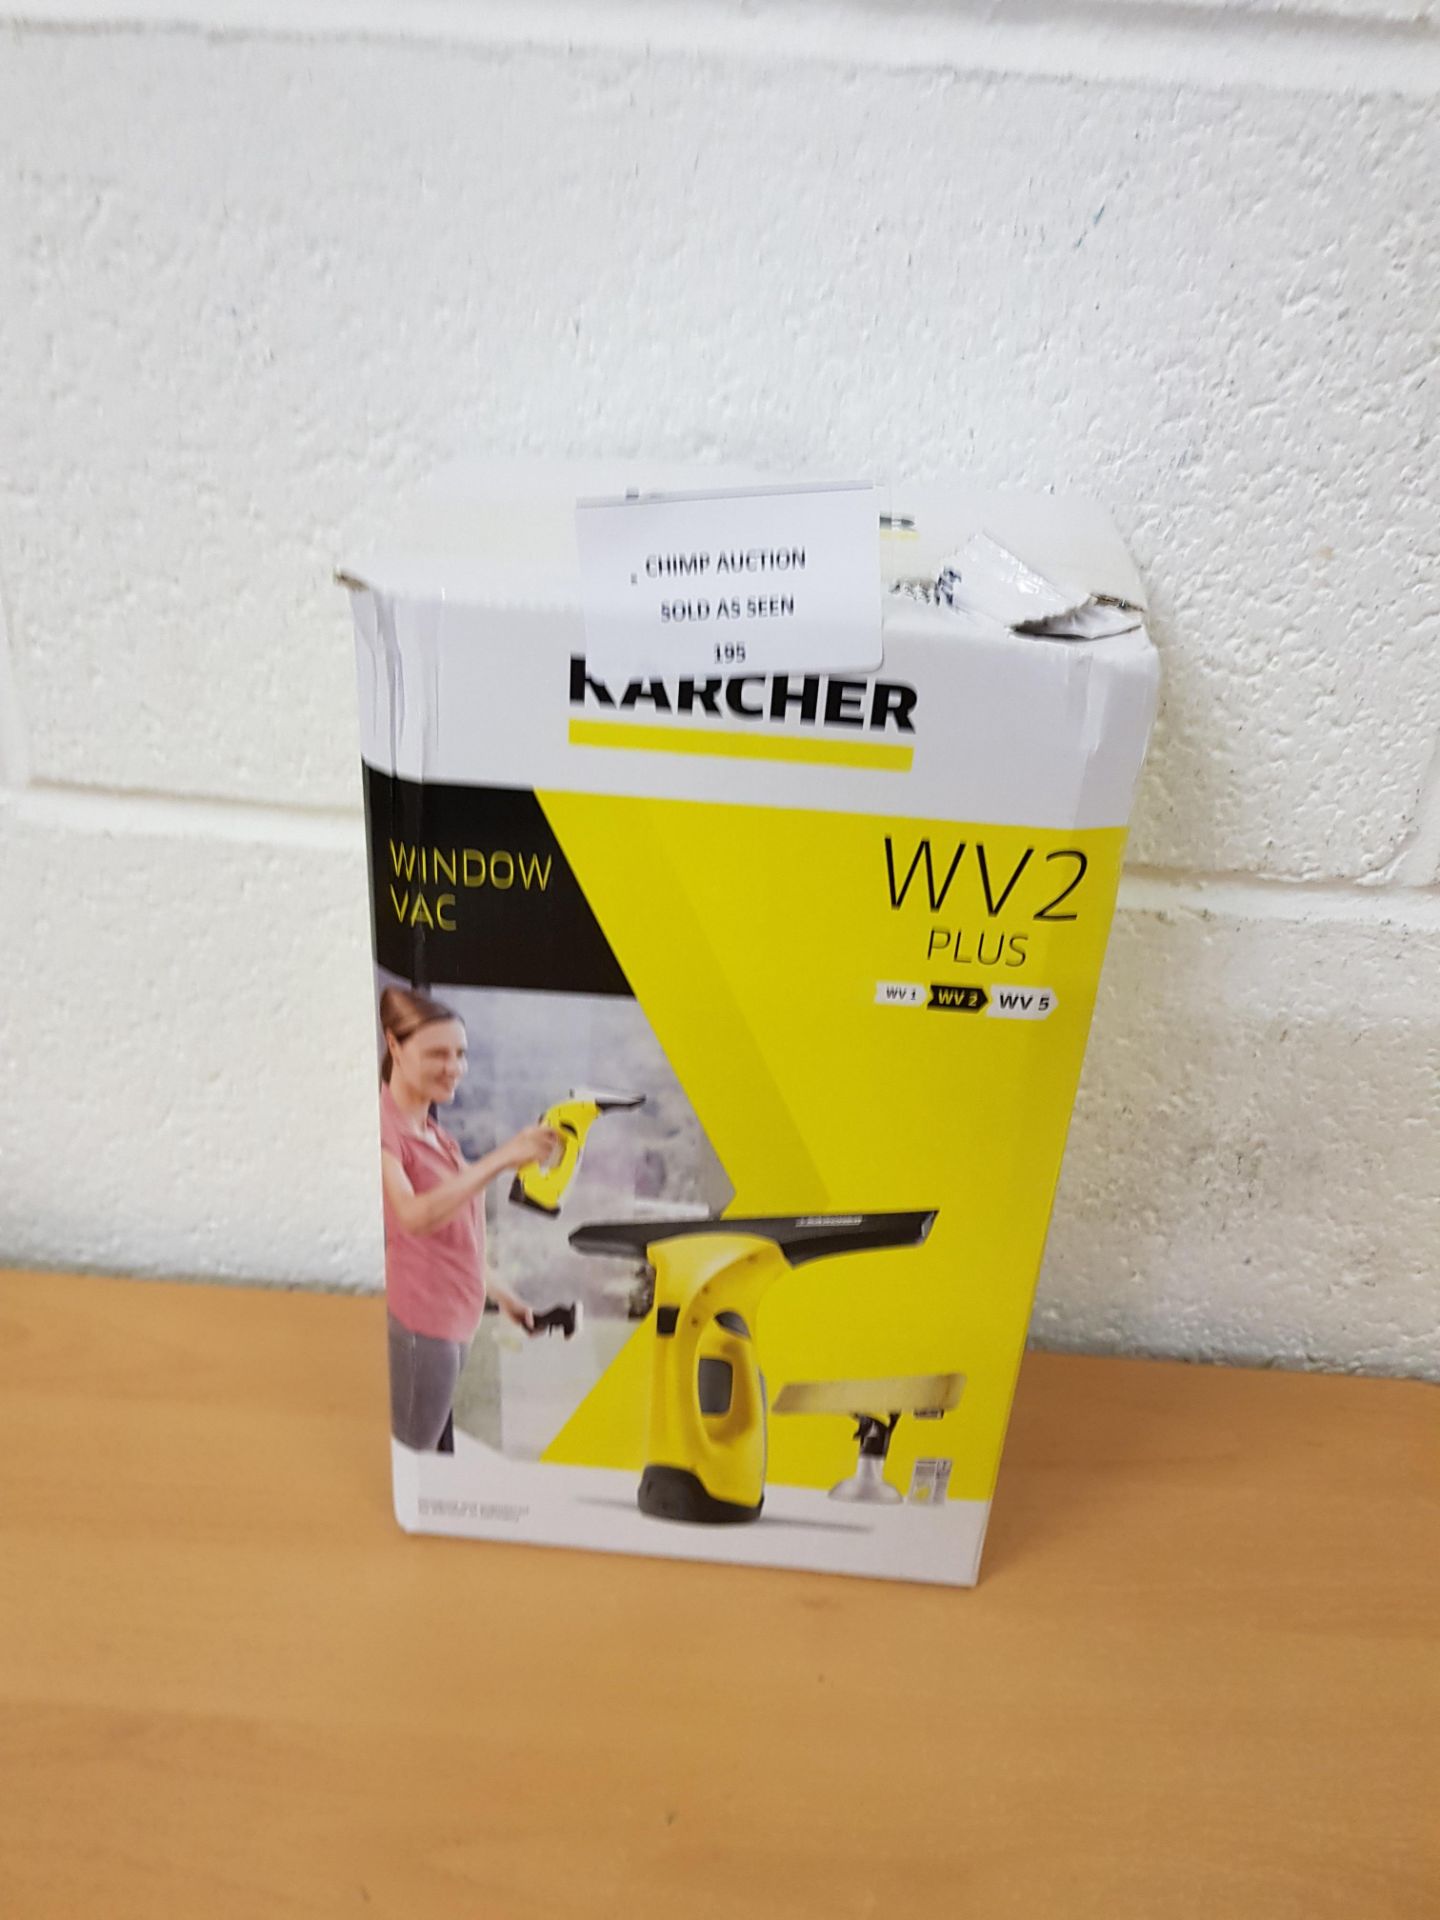 Kärcher Window Vac WV2 Plus Window cleaner RRP £69.99.